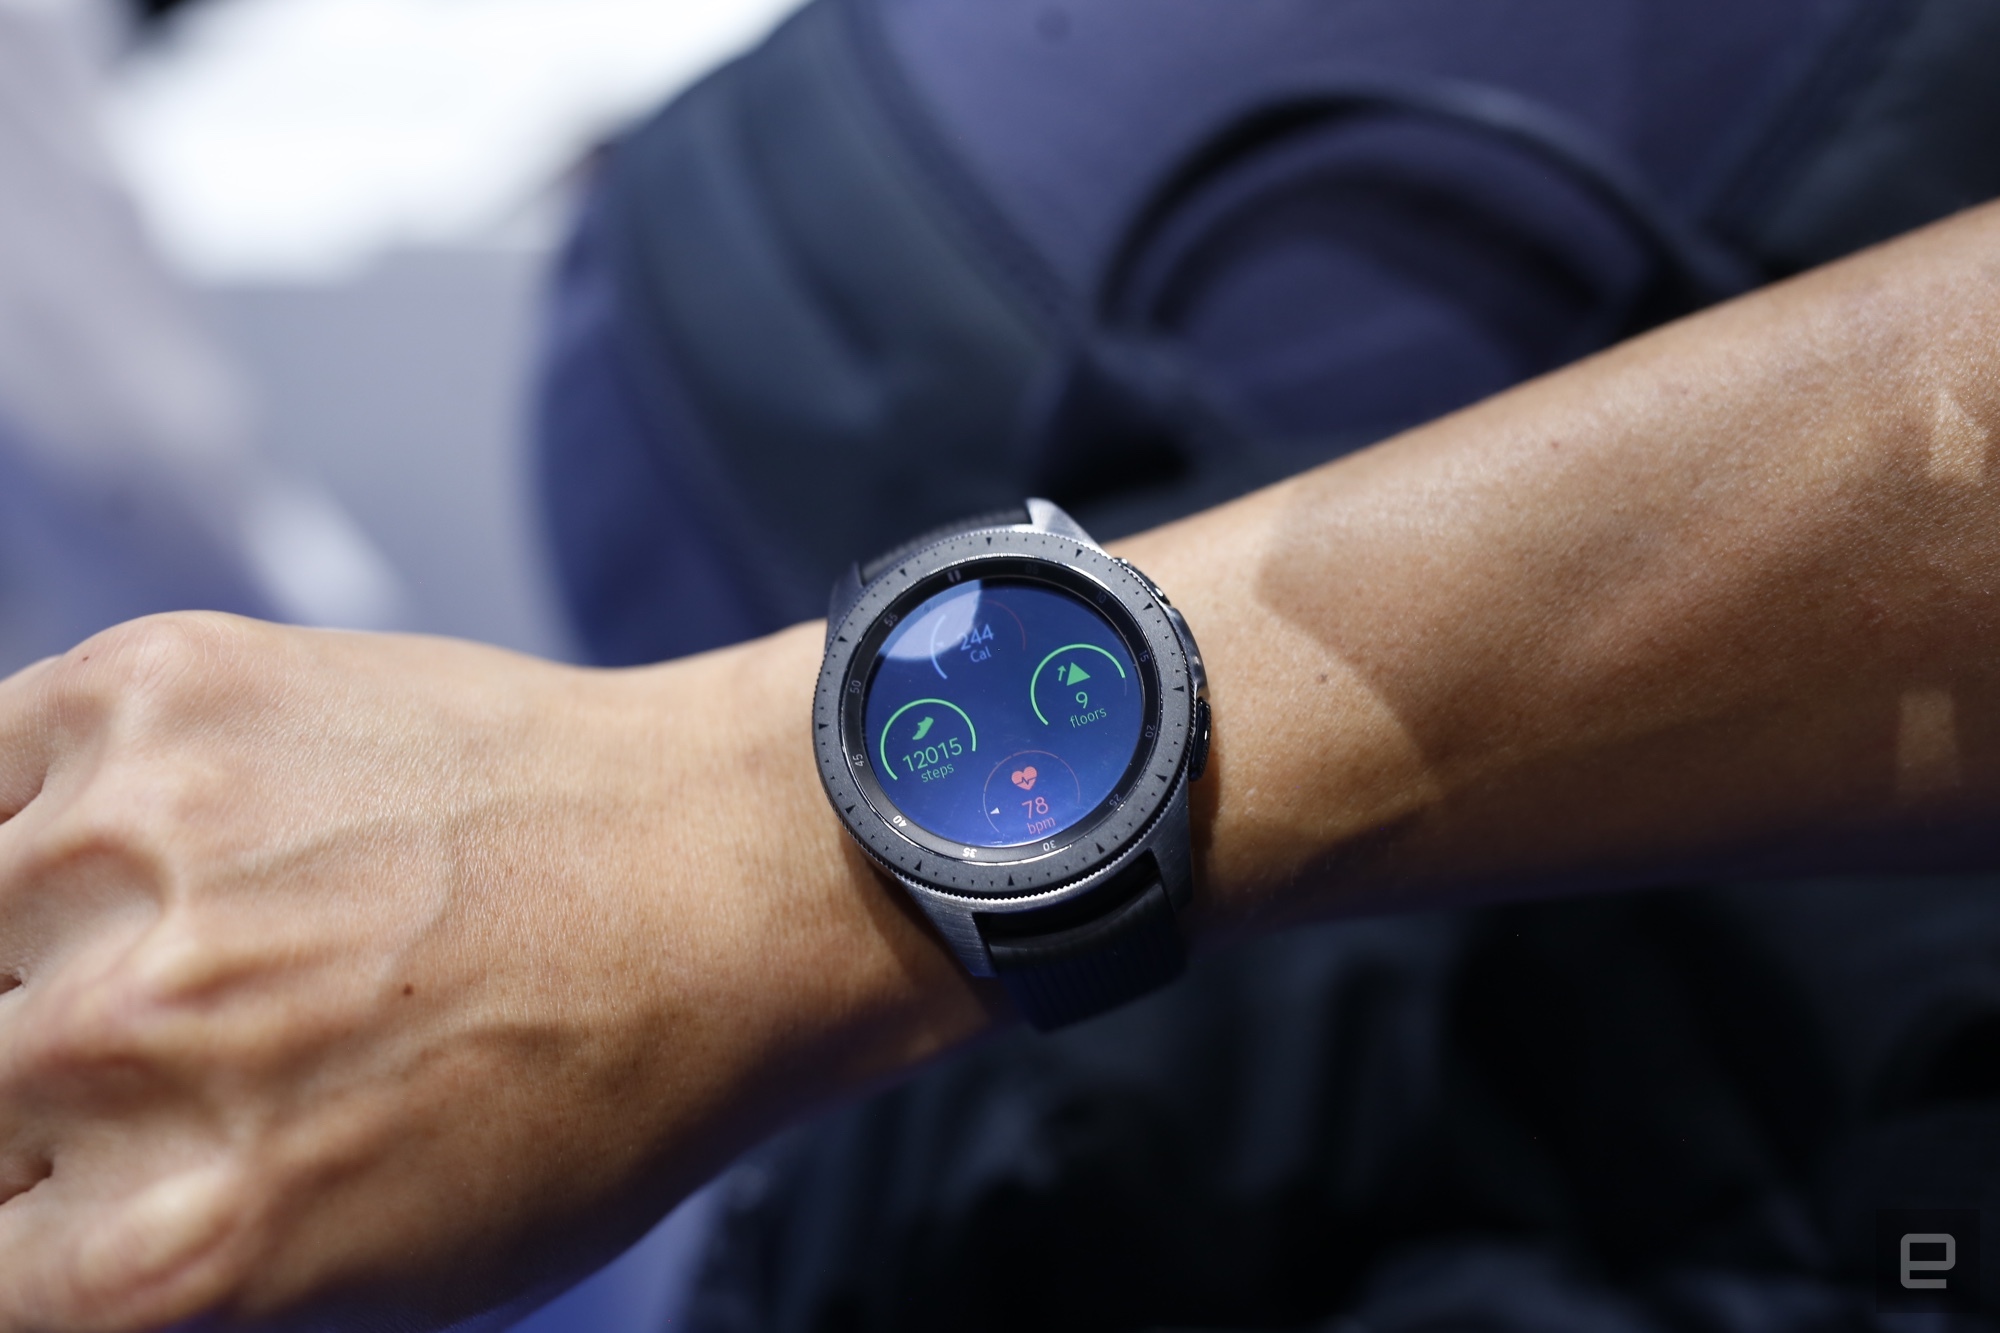 Galaxy watch какие выбрать. Часы самсунг Galaxy 42mm. Умные часы Samsung Galaxy watch 42mm. Galaxy watch 42mm (2018). Samsung Galaxy watch 42mm на руке.